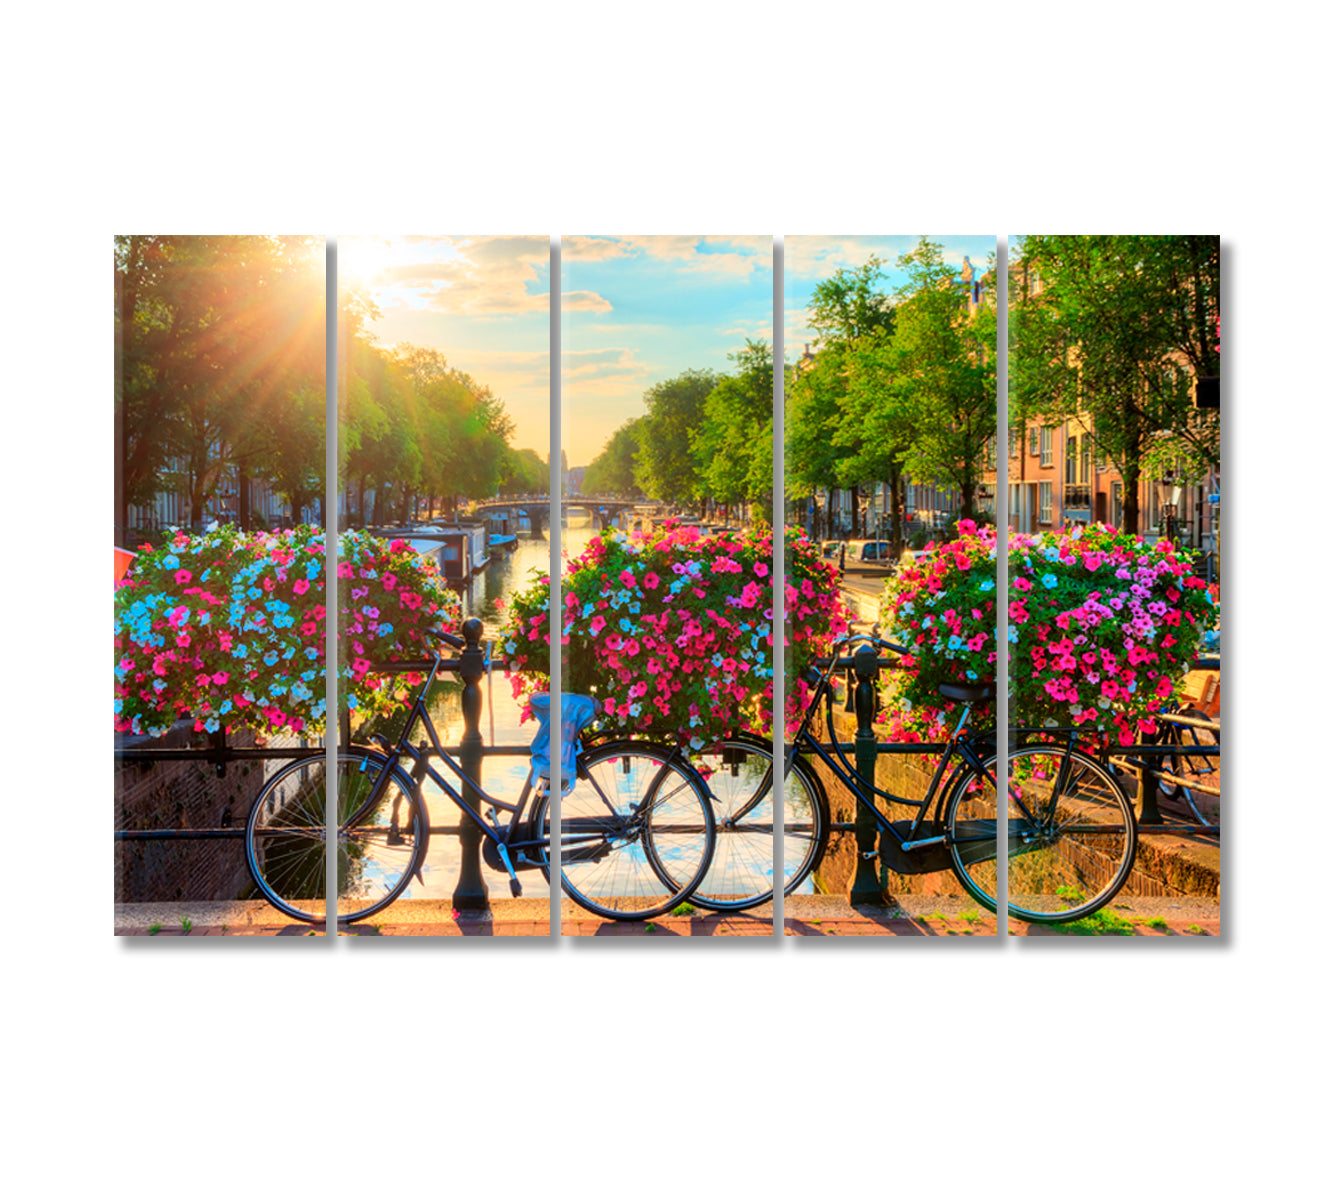 Bikes on Bridge of Amsterdam UNESCO World Heritage Canals Canvas Print-Canvas Print-CetArt-5 Panels-36x24 inches-CetArt